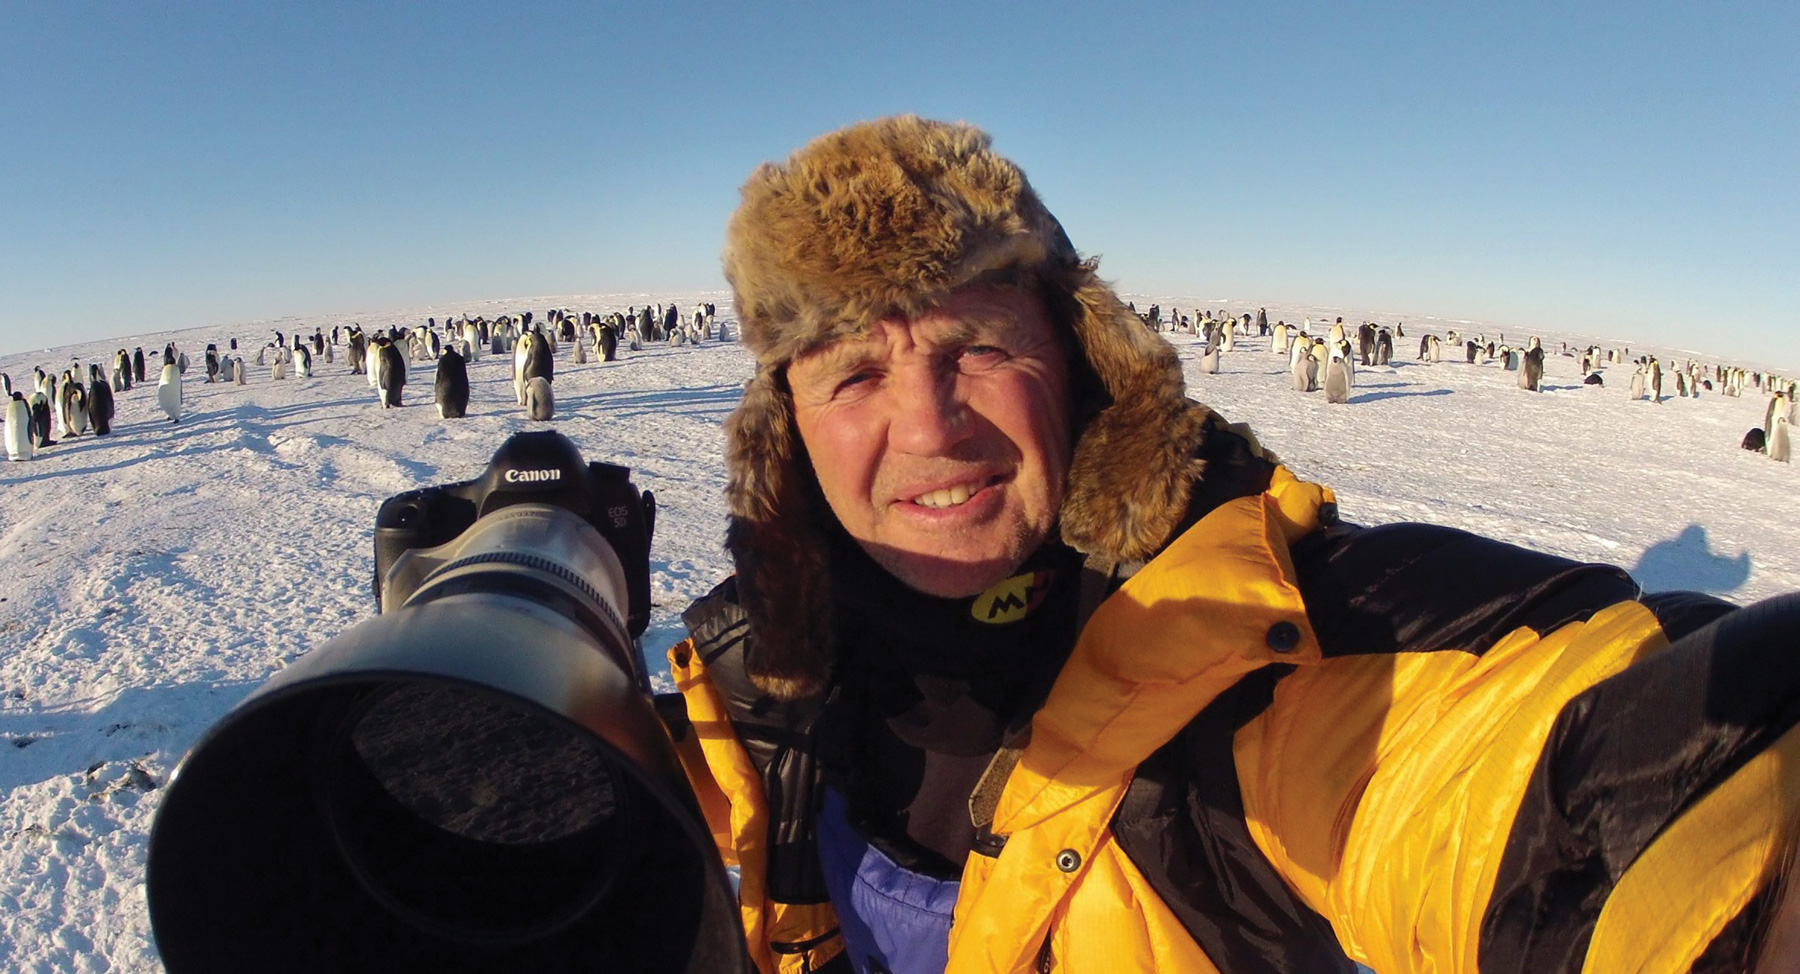 Doug Allan reviews the new Swarovski binoculars